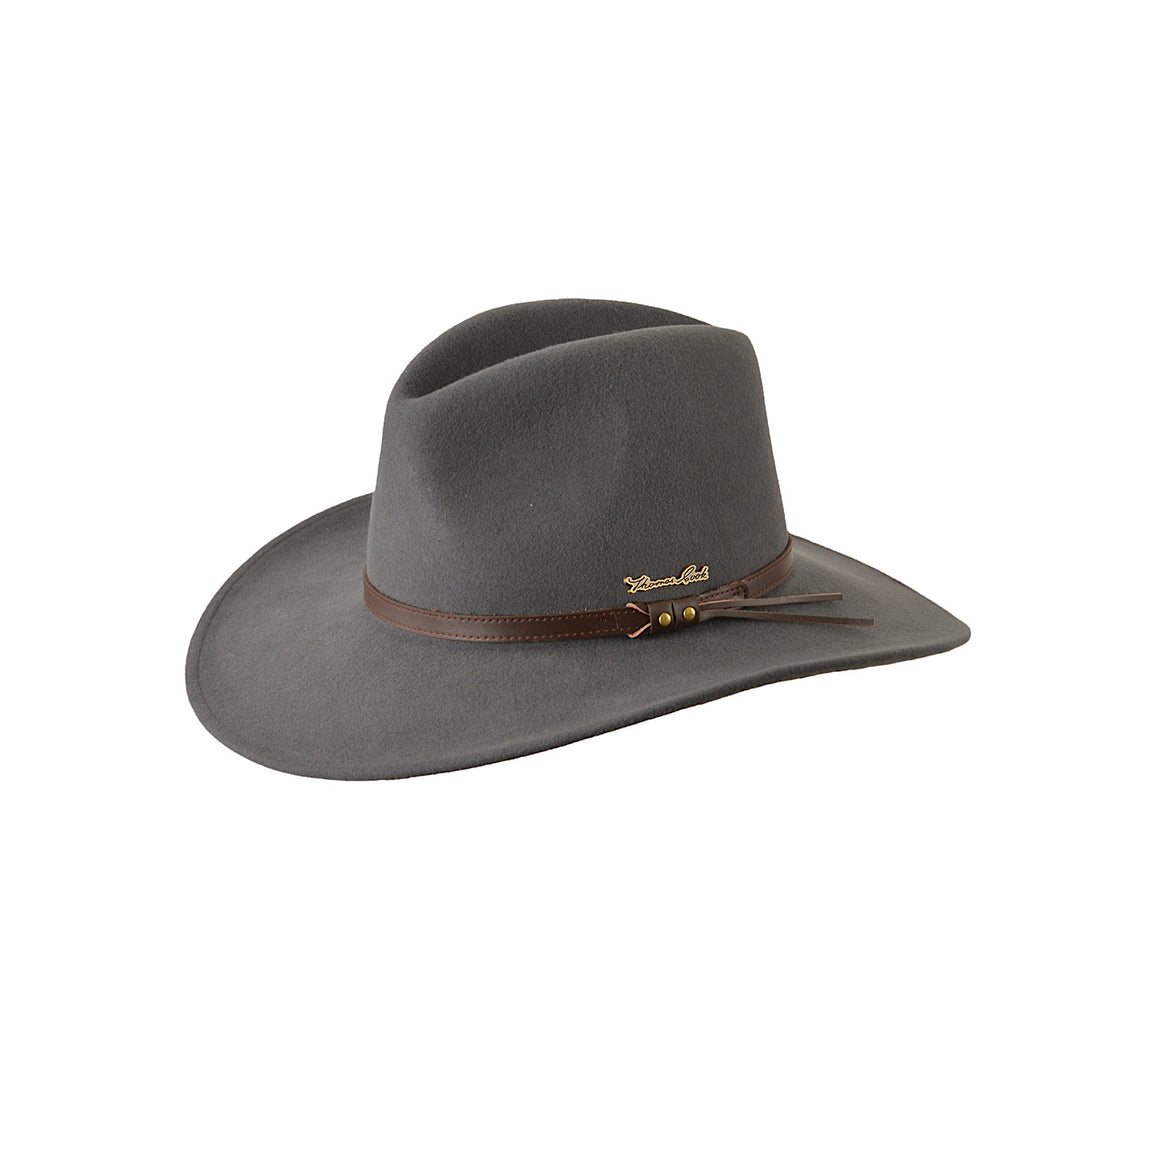 Thomas Cook Original Crushable Hat Grey